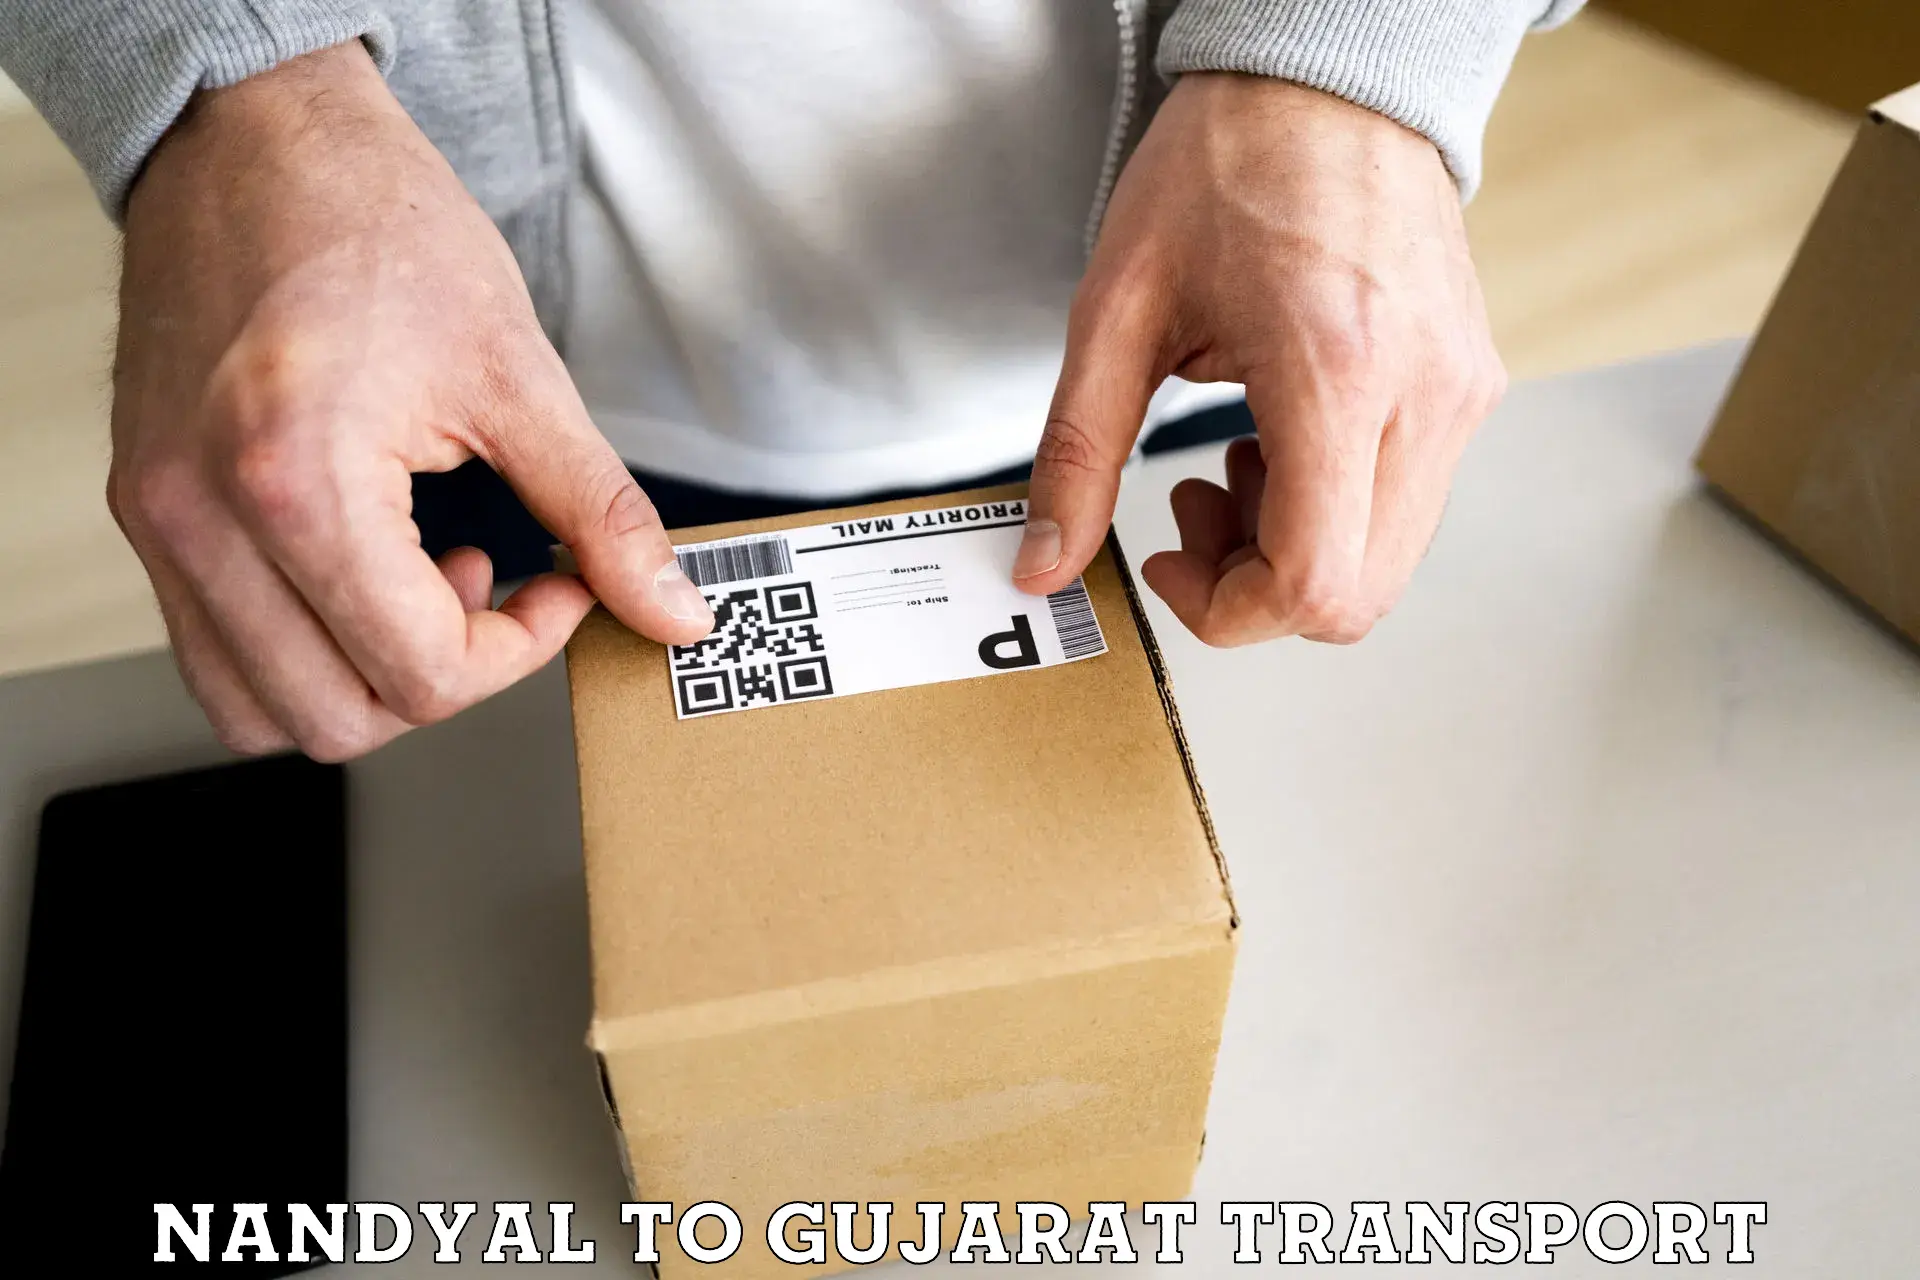 Online transport service Nandyal to Rajkot